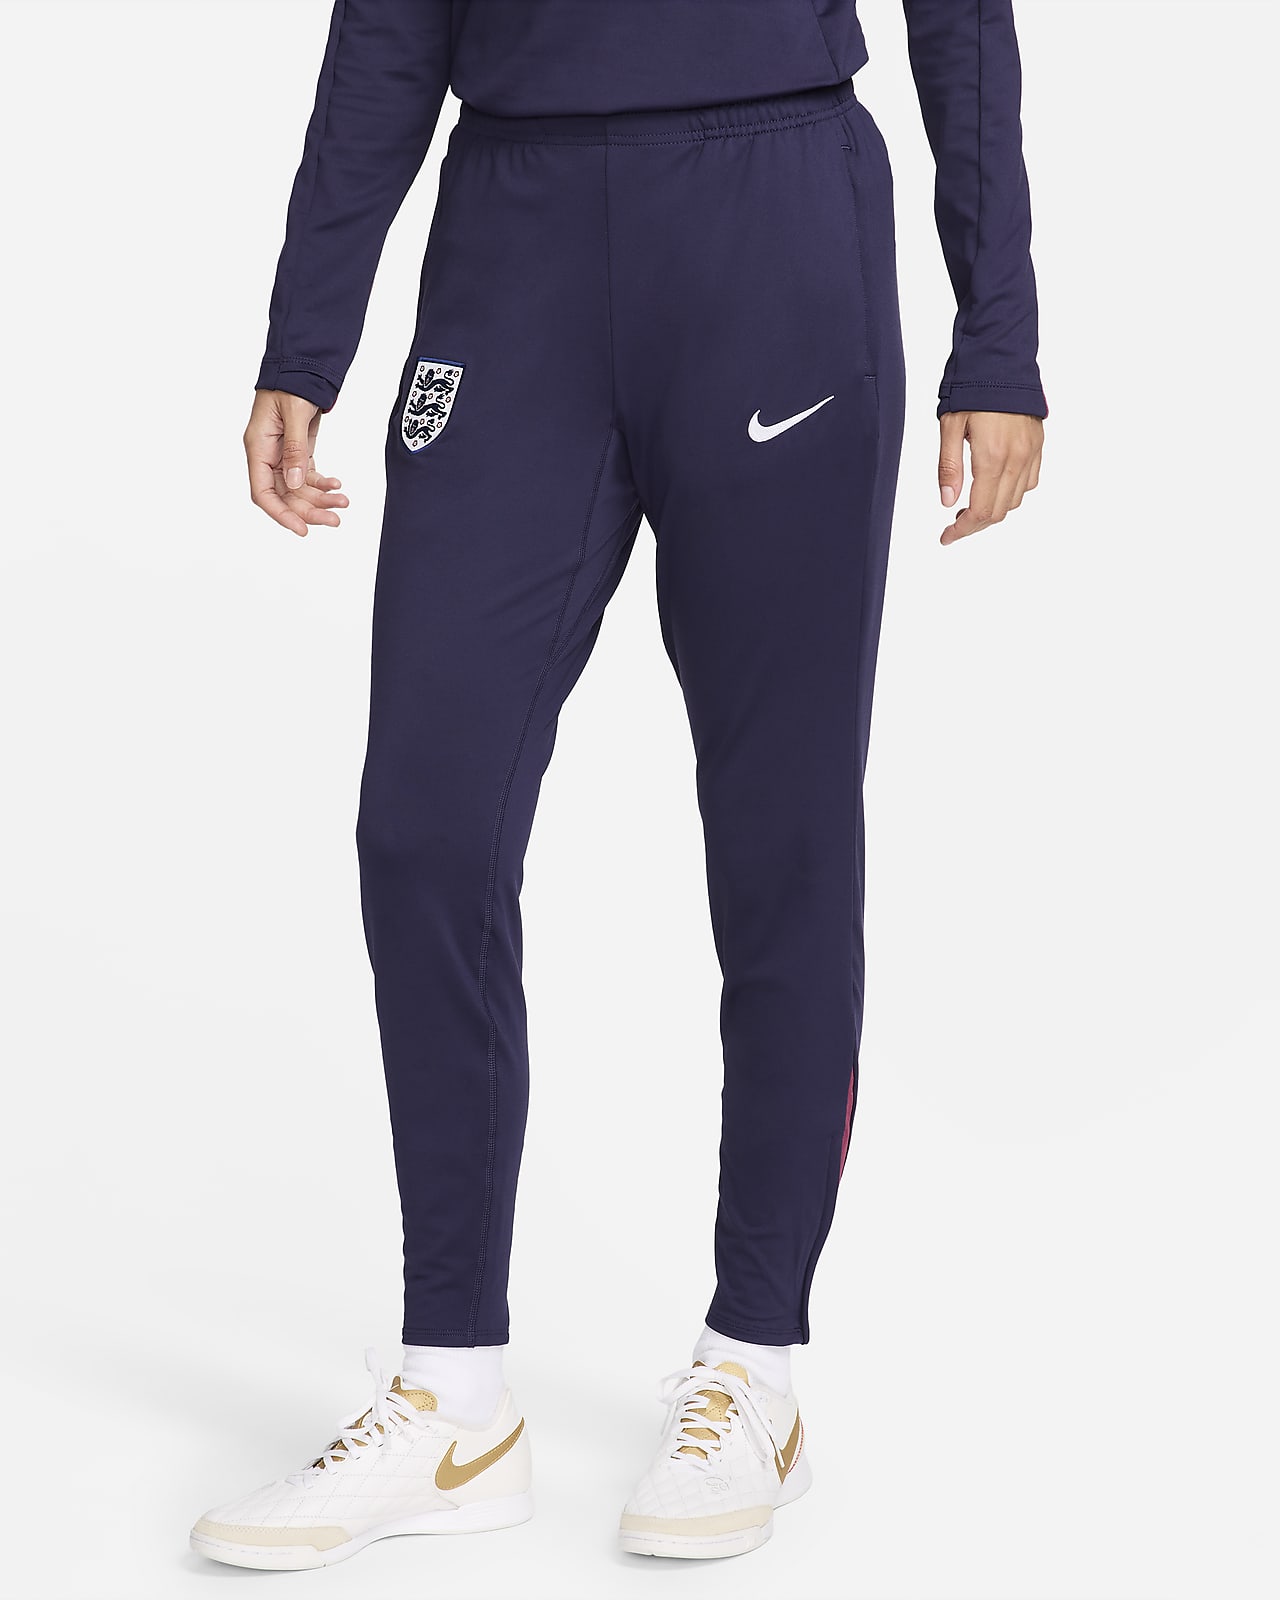 Anglaterra Strike Pantalons de futbol de teixit Knit Nike Dri-FIT - Dona